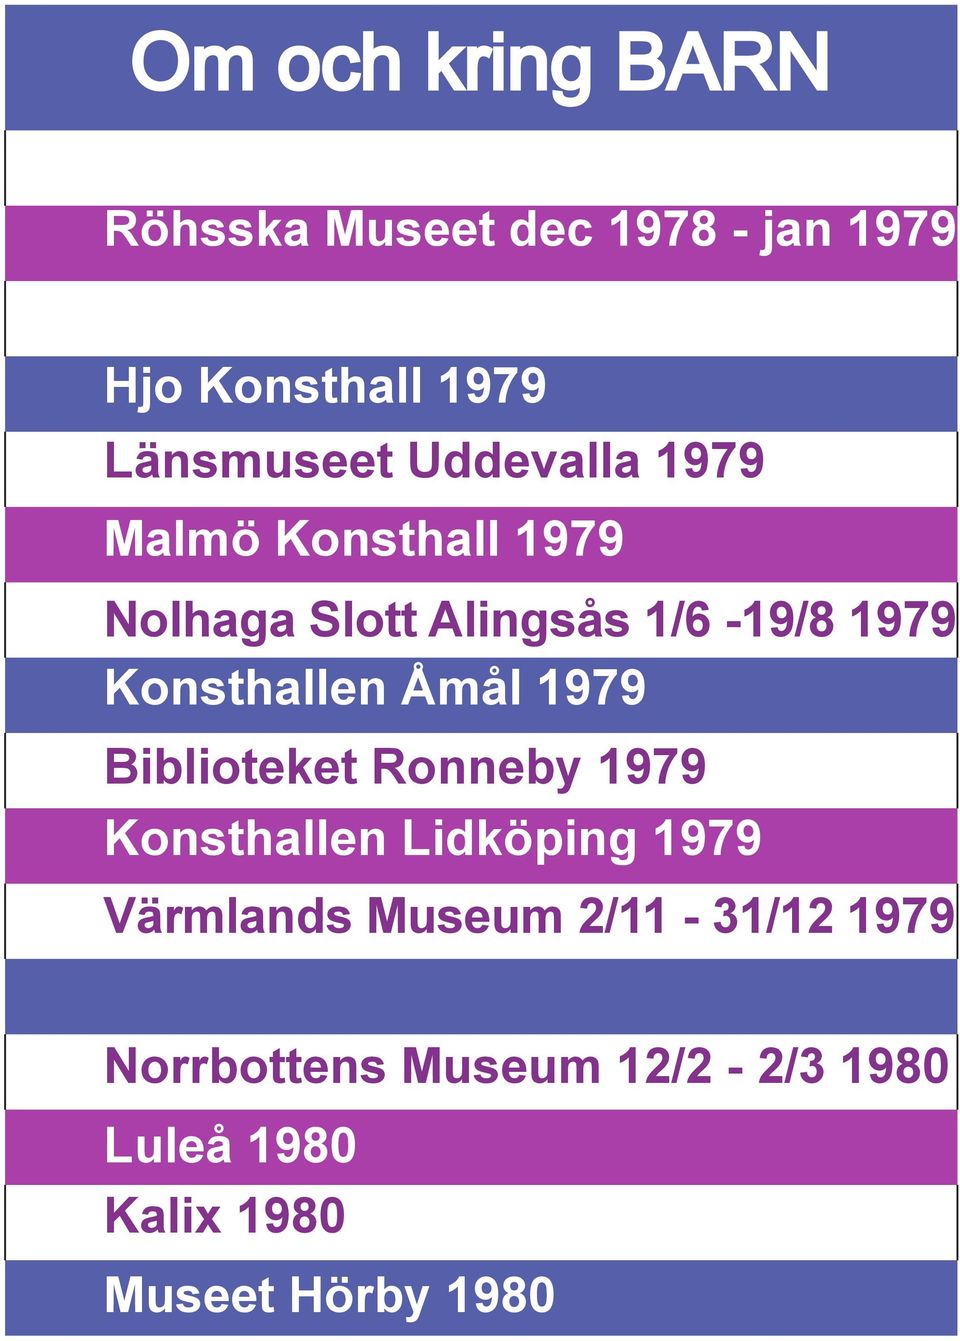 Biblioteket Ronneby 1979 Konsthallen Lidköping 1979 Värmlands Museum 2/11-31/12